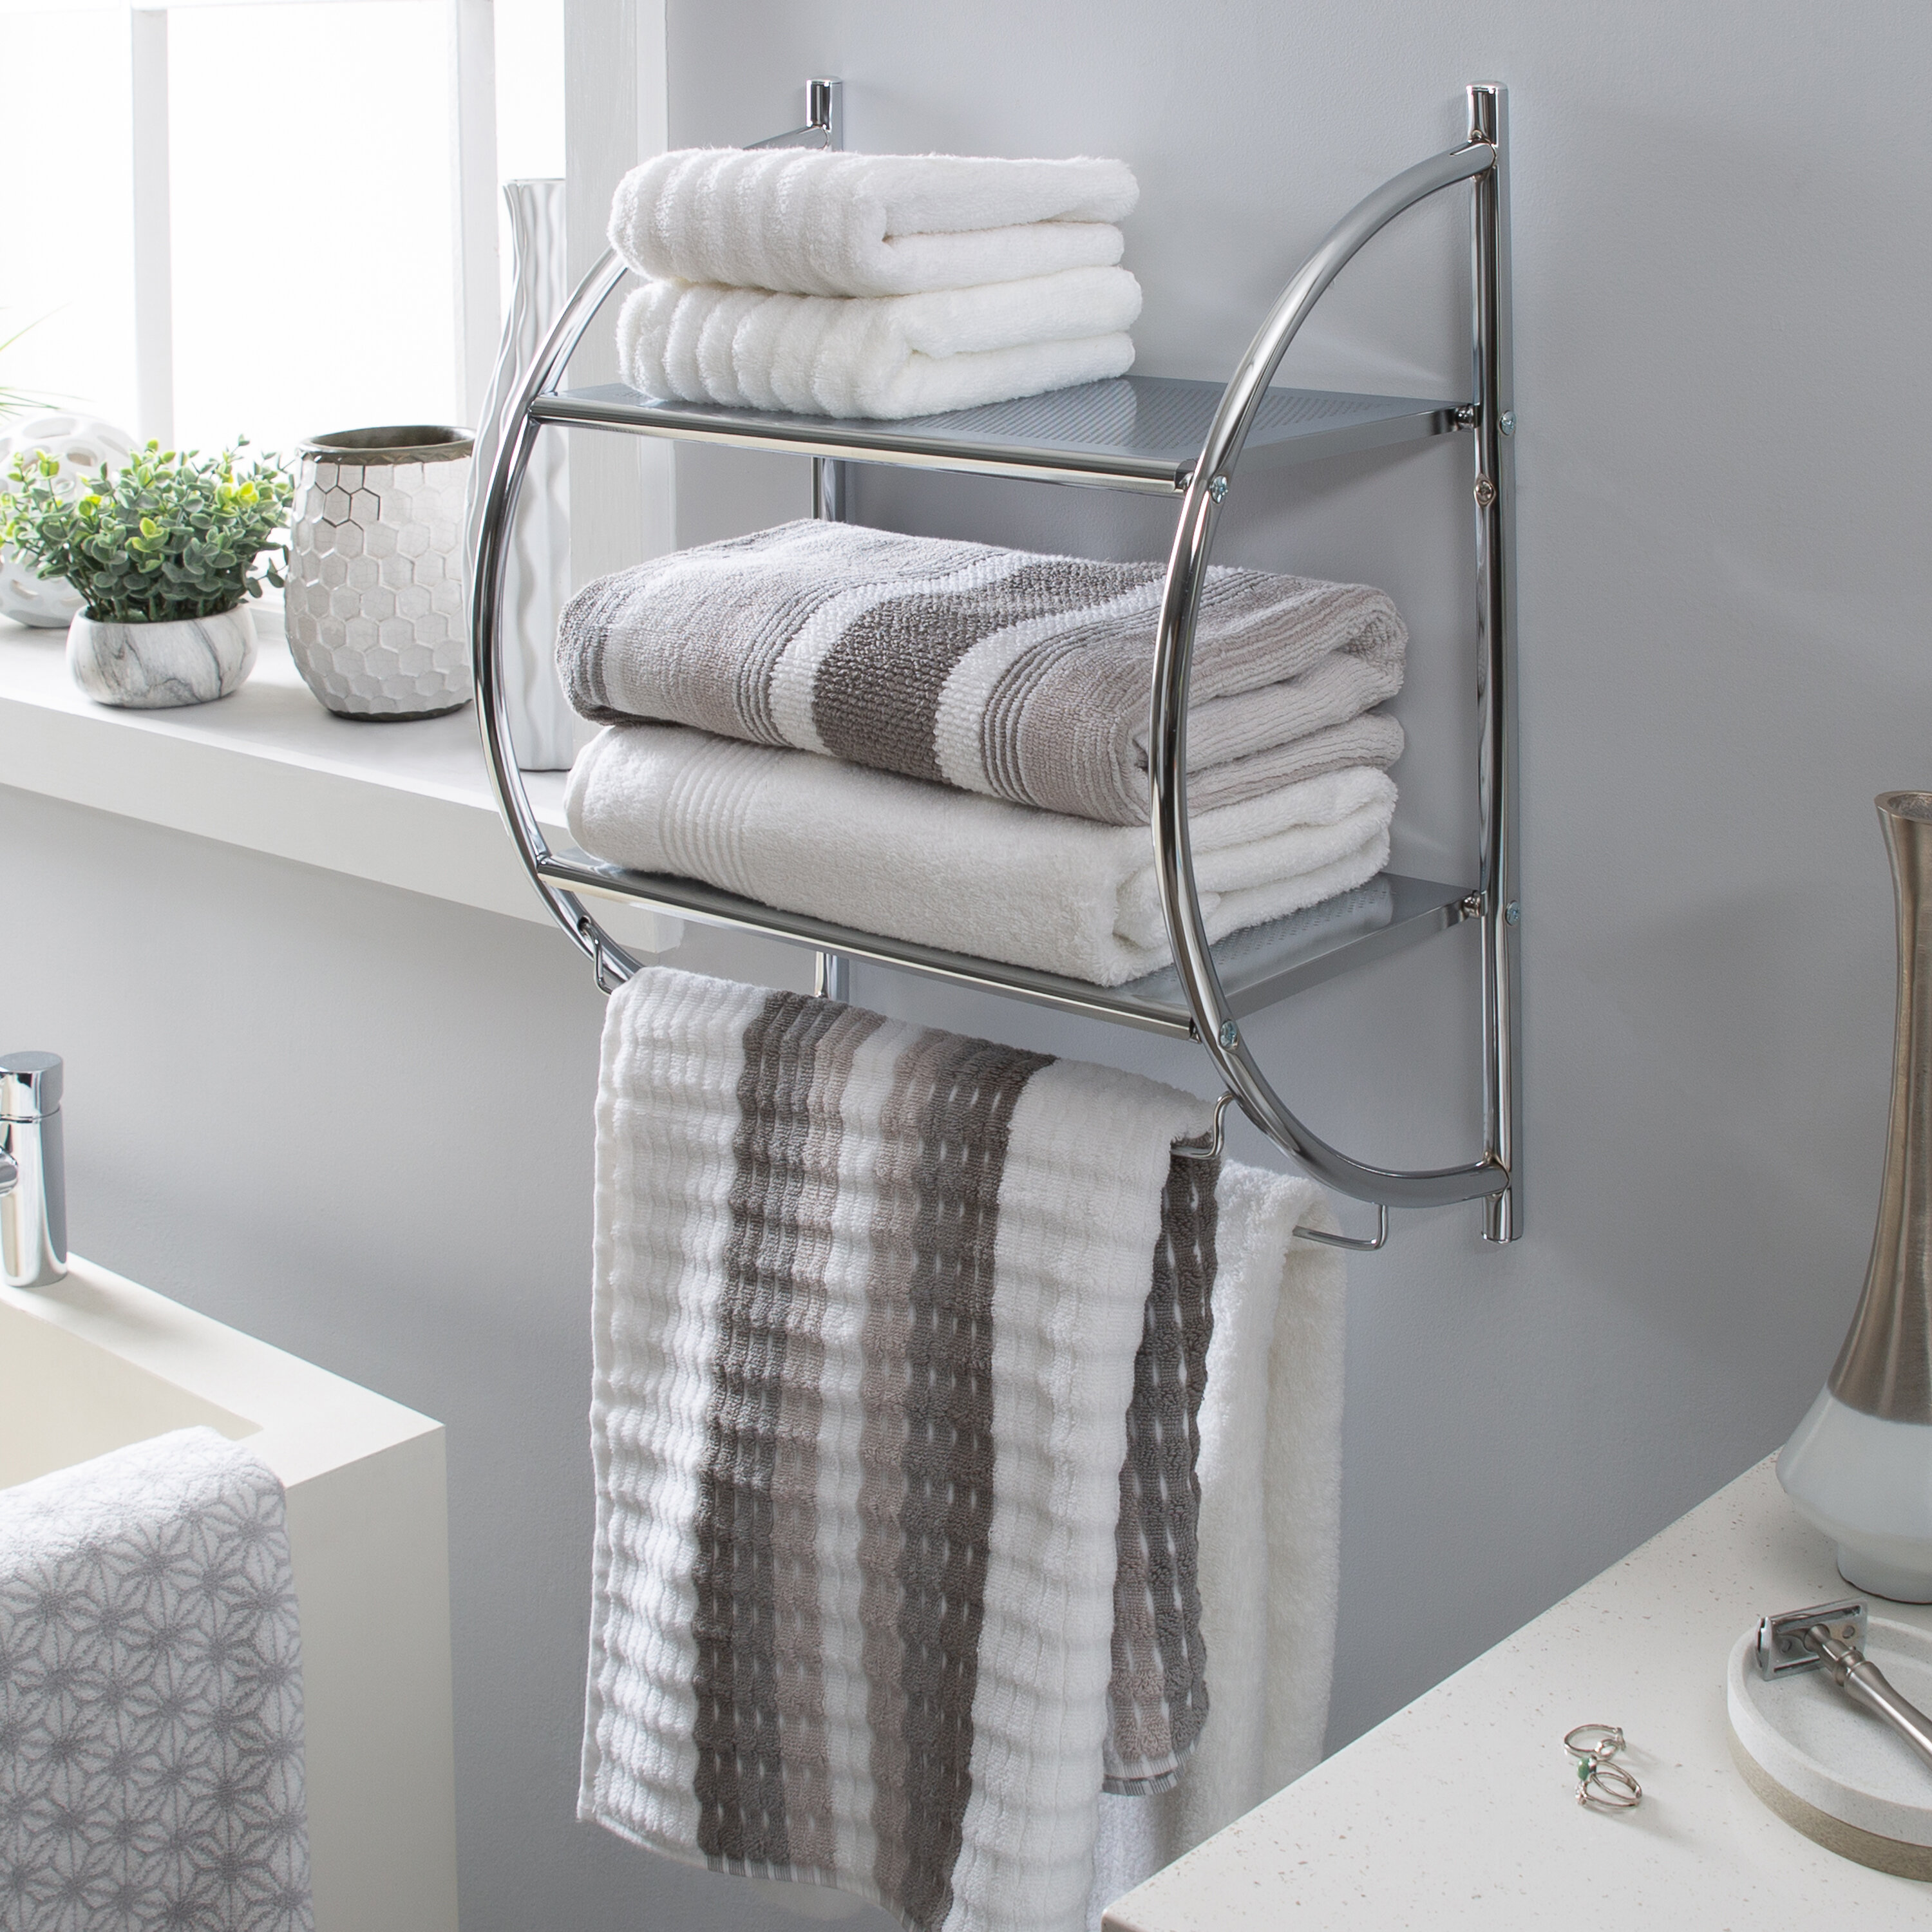 Guest Bathroom Chrome mDesign Wall Mount Towel Storage Rack for Bathroom Pack of 2 